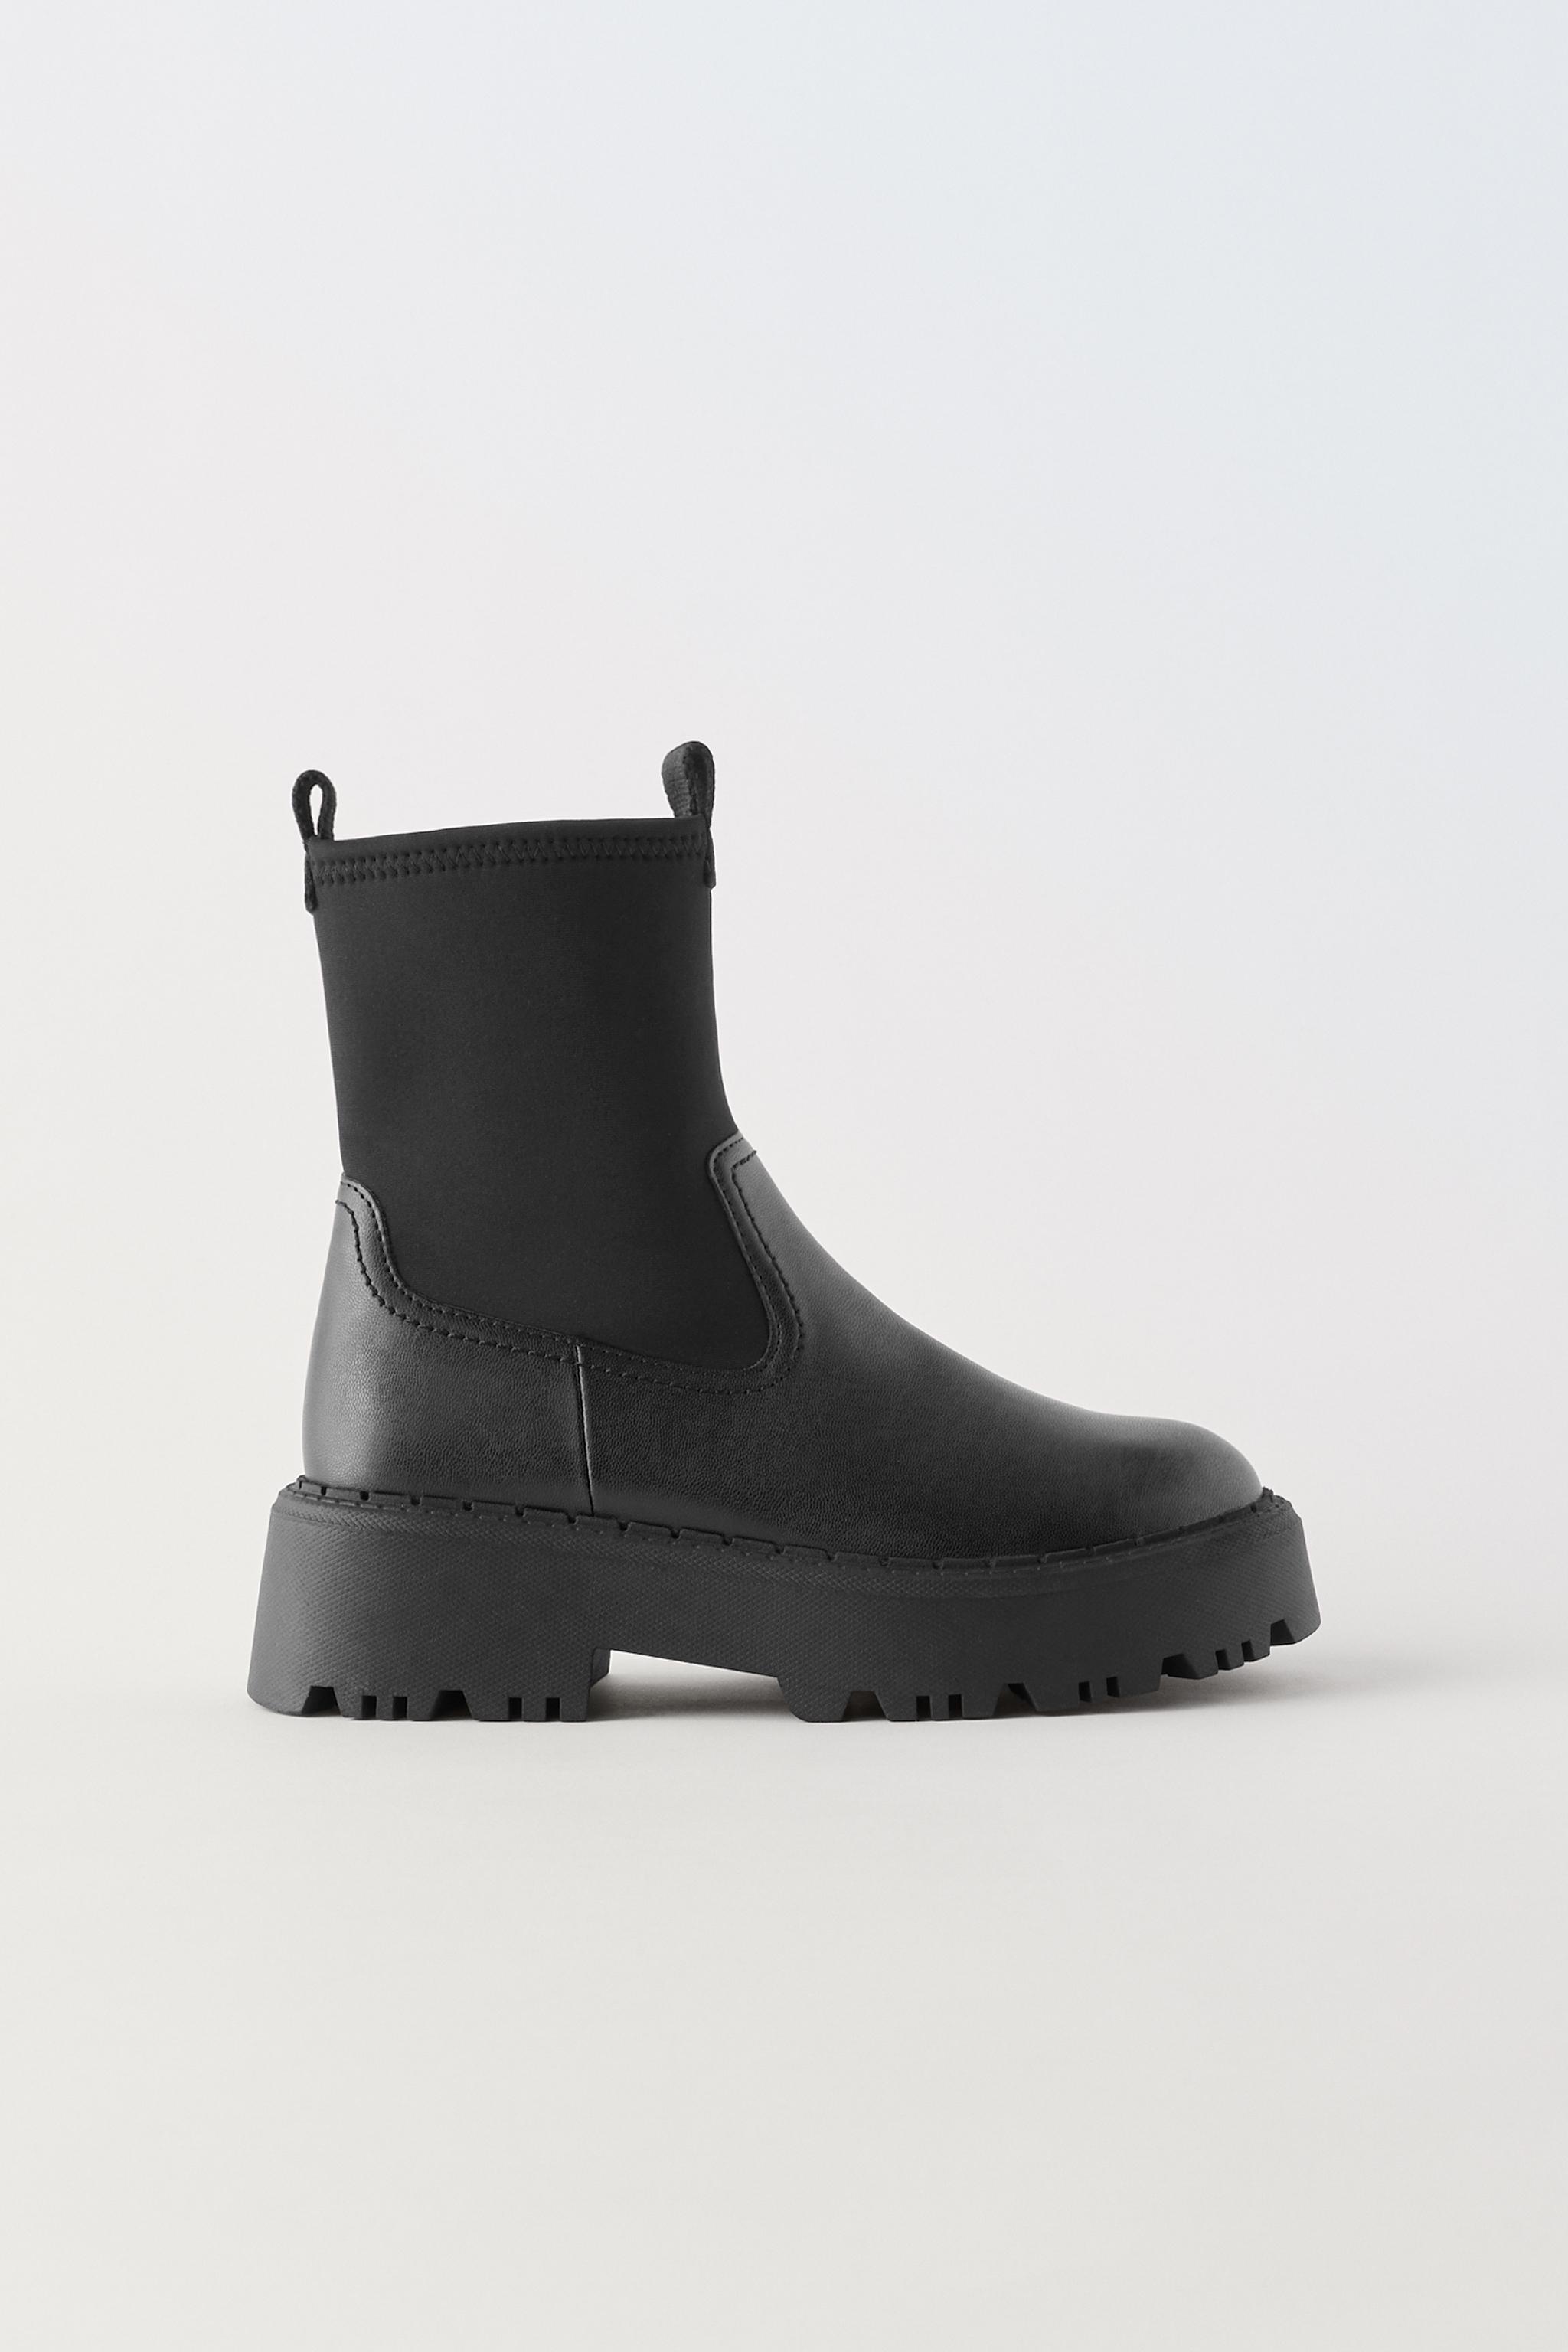 Zara Solid Black Boots Size 39 (EU) - 51% off